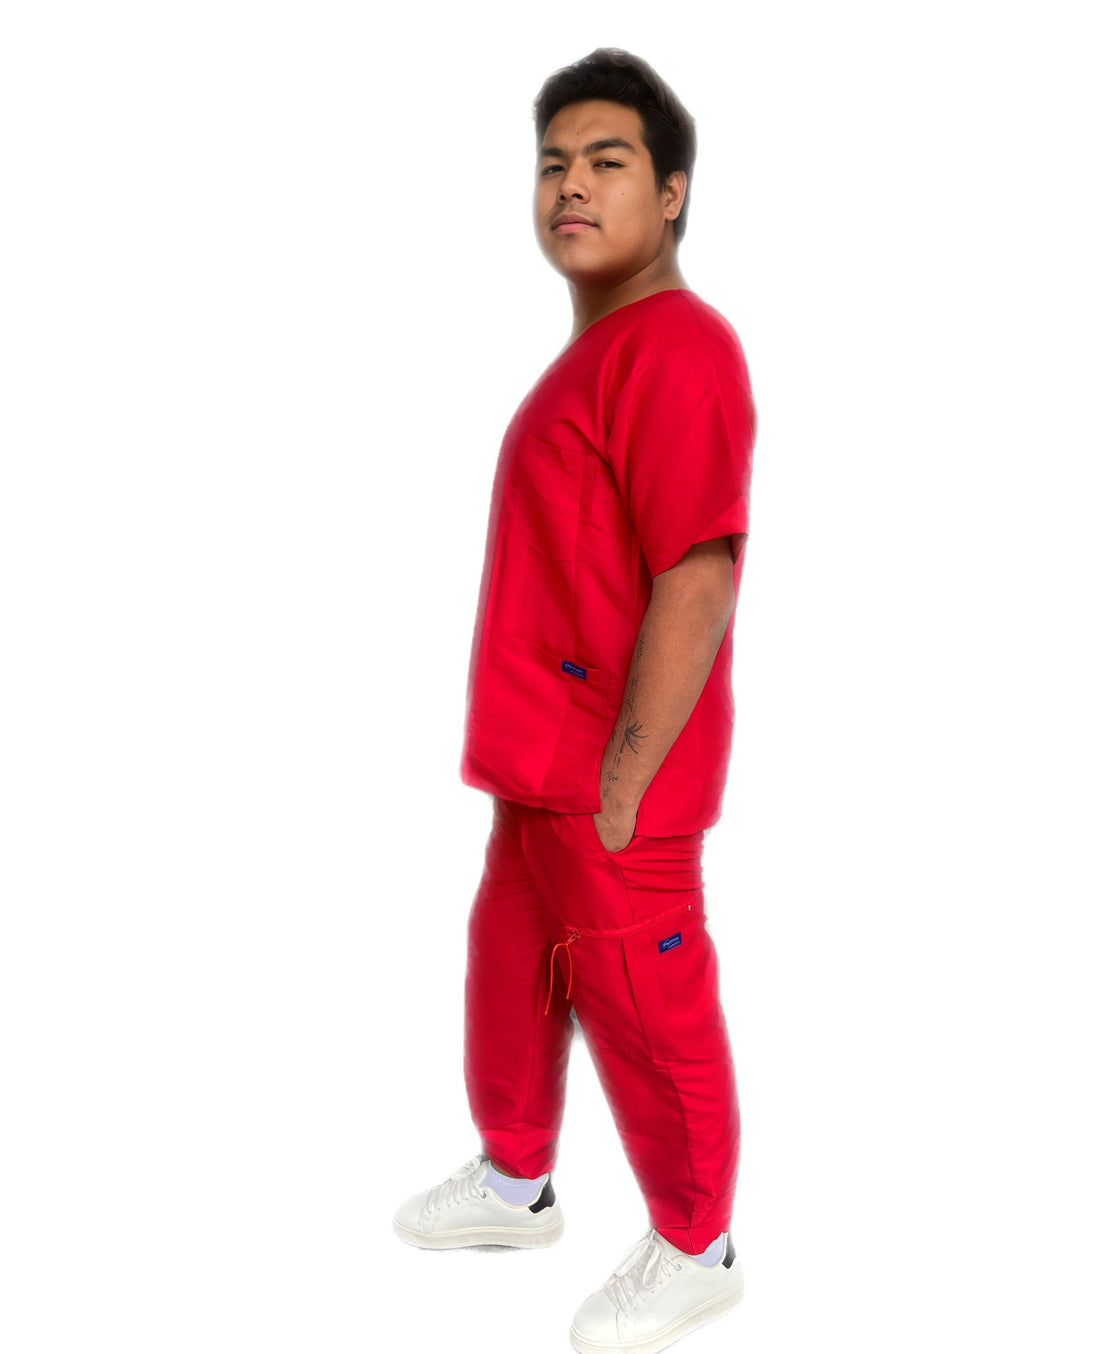 quirurgico rojo mexico,  uniformes Stanford, uniformes México, uniformes hombre, uniformes doctores   filipina medica pijama quirúrgica uniformes clínicos uniformes mexicoentrefa gratis de uniformes, 